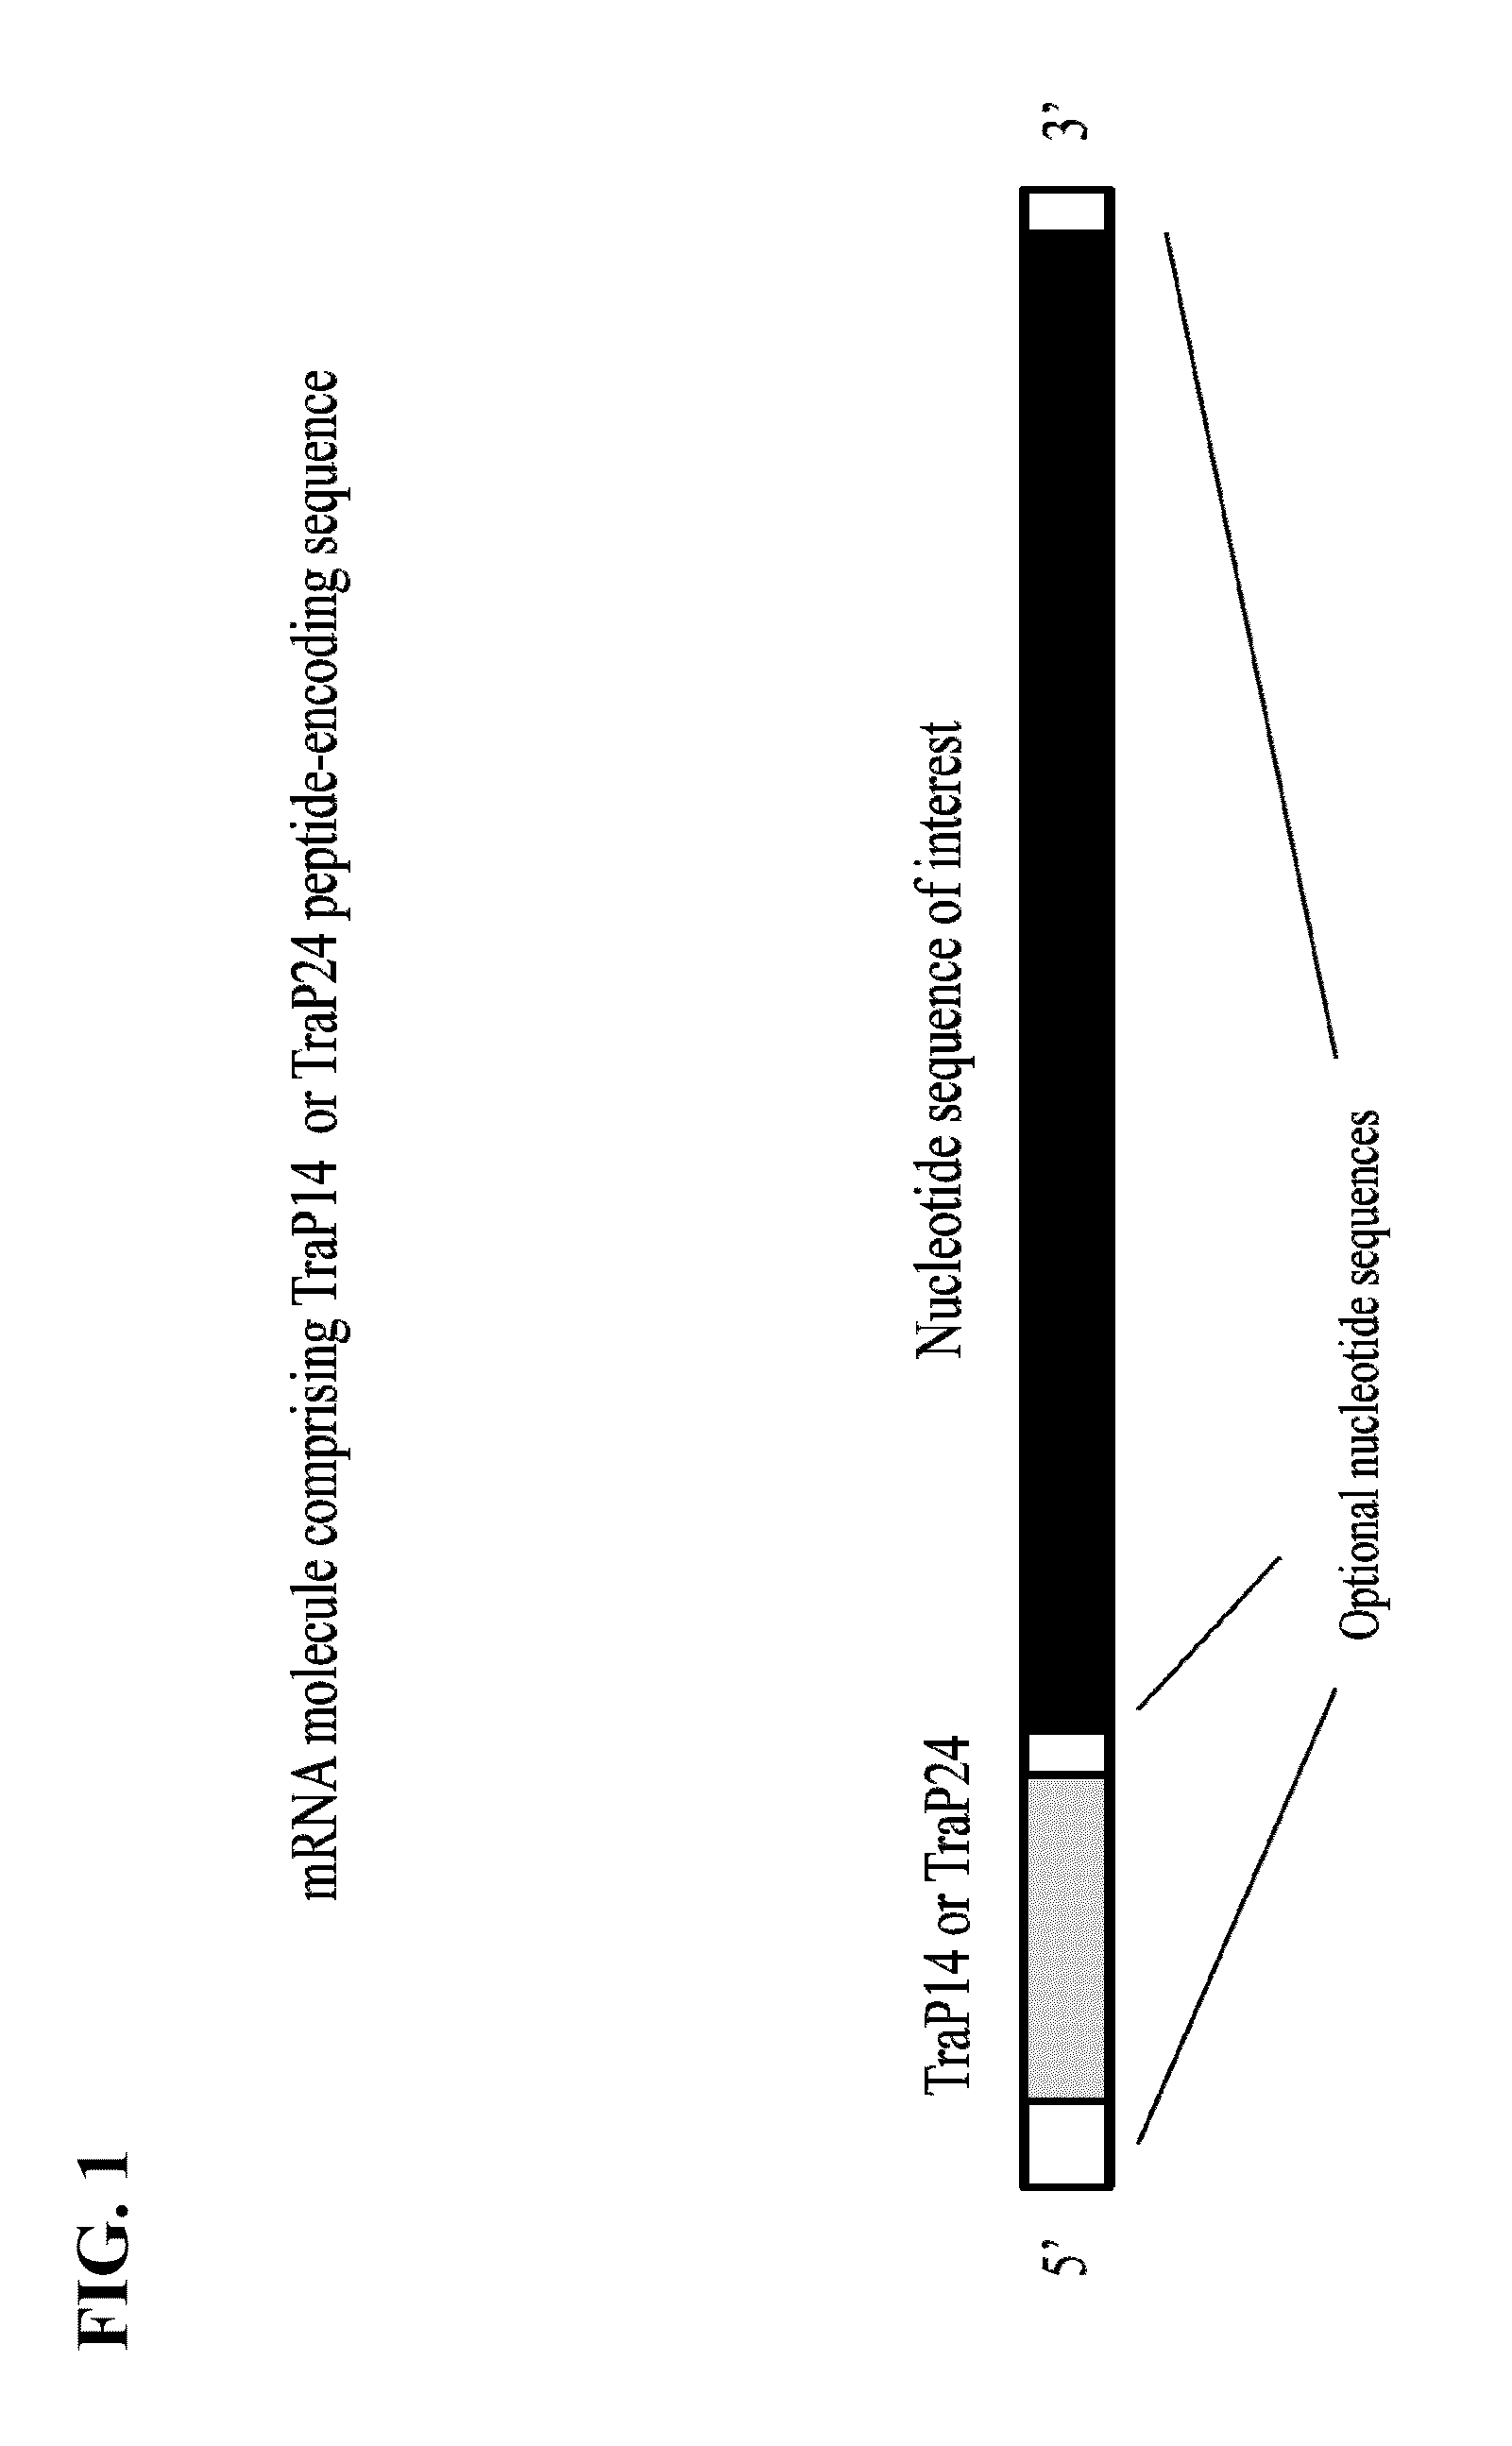 Chloroplast transit peptide